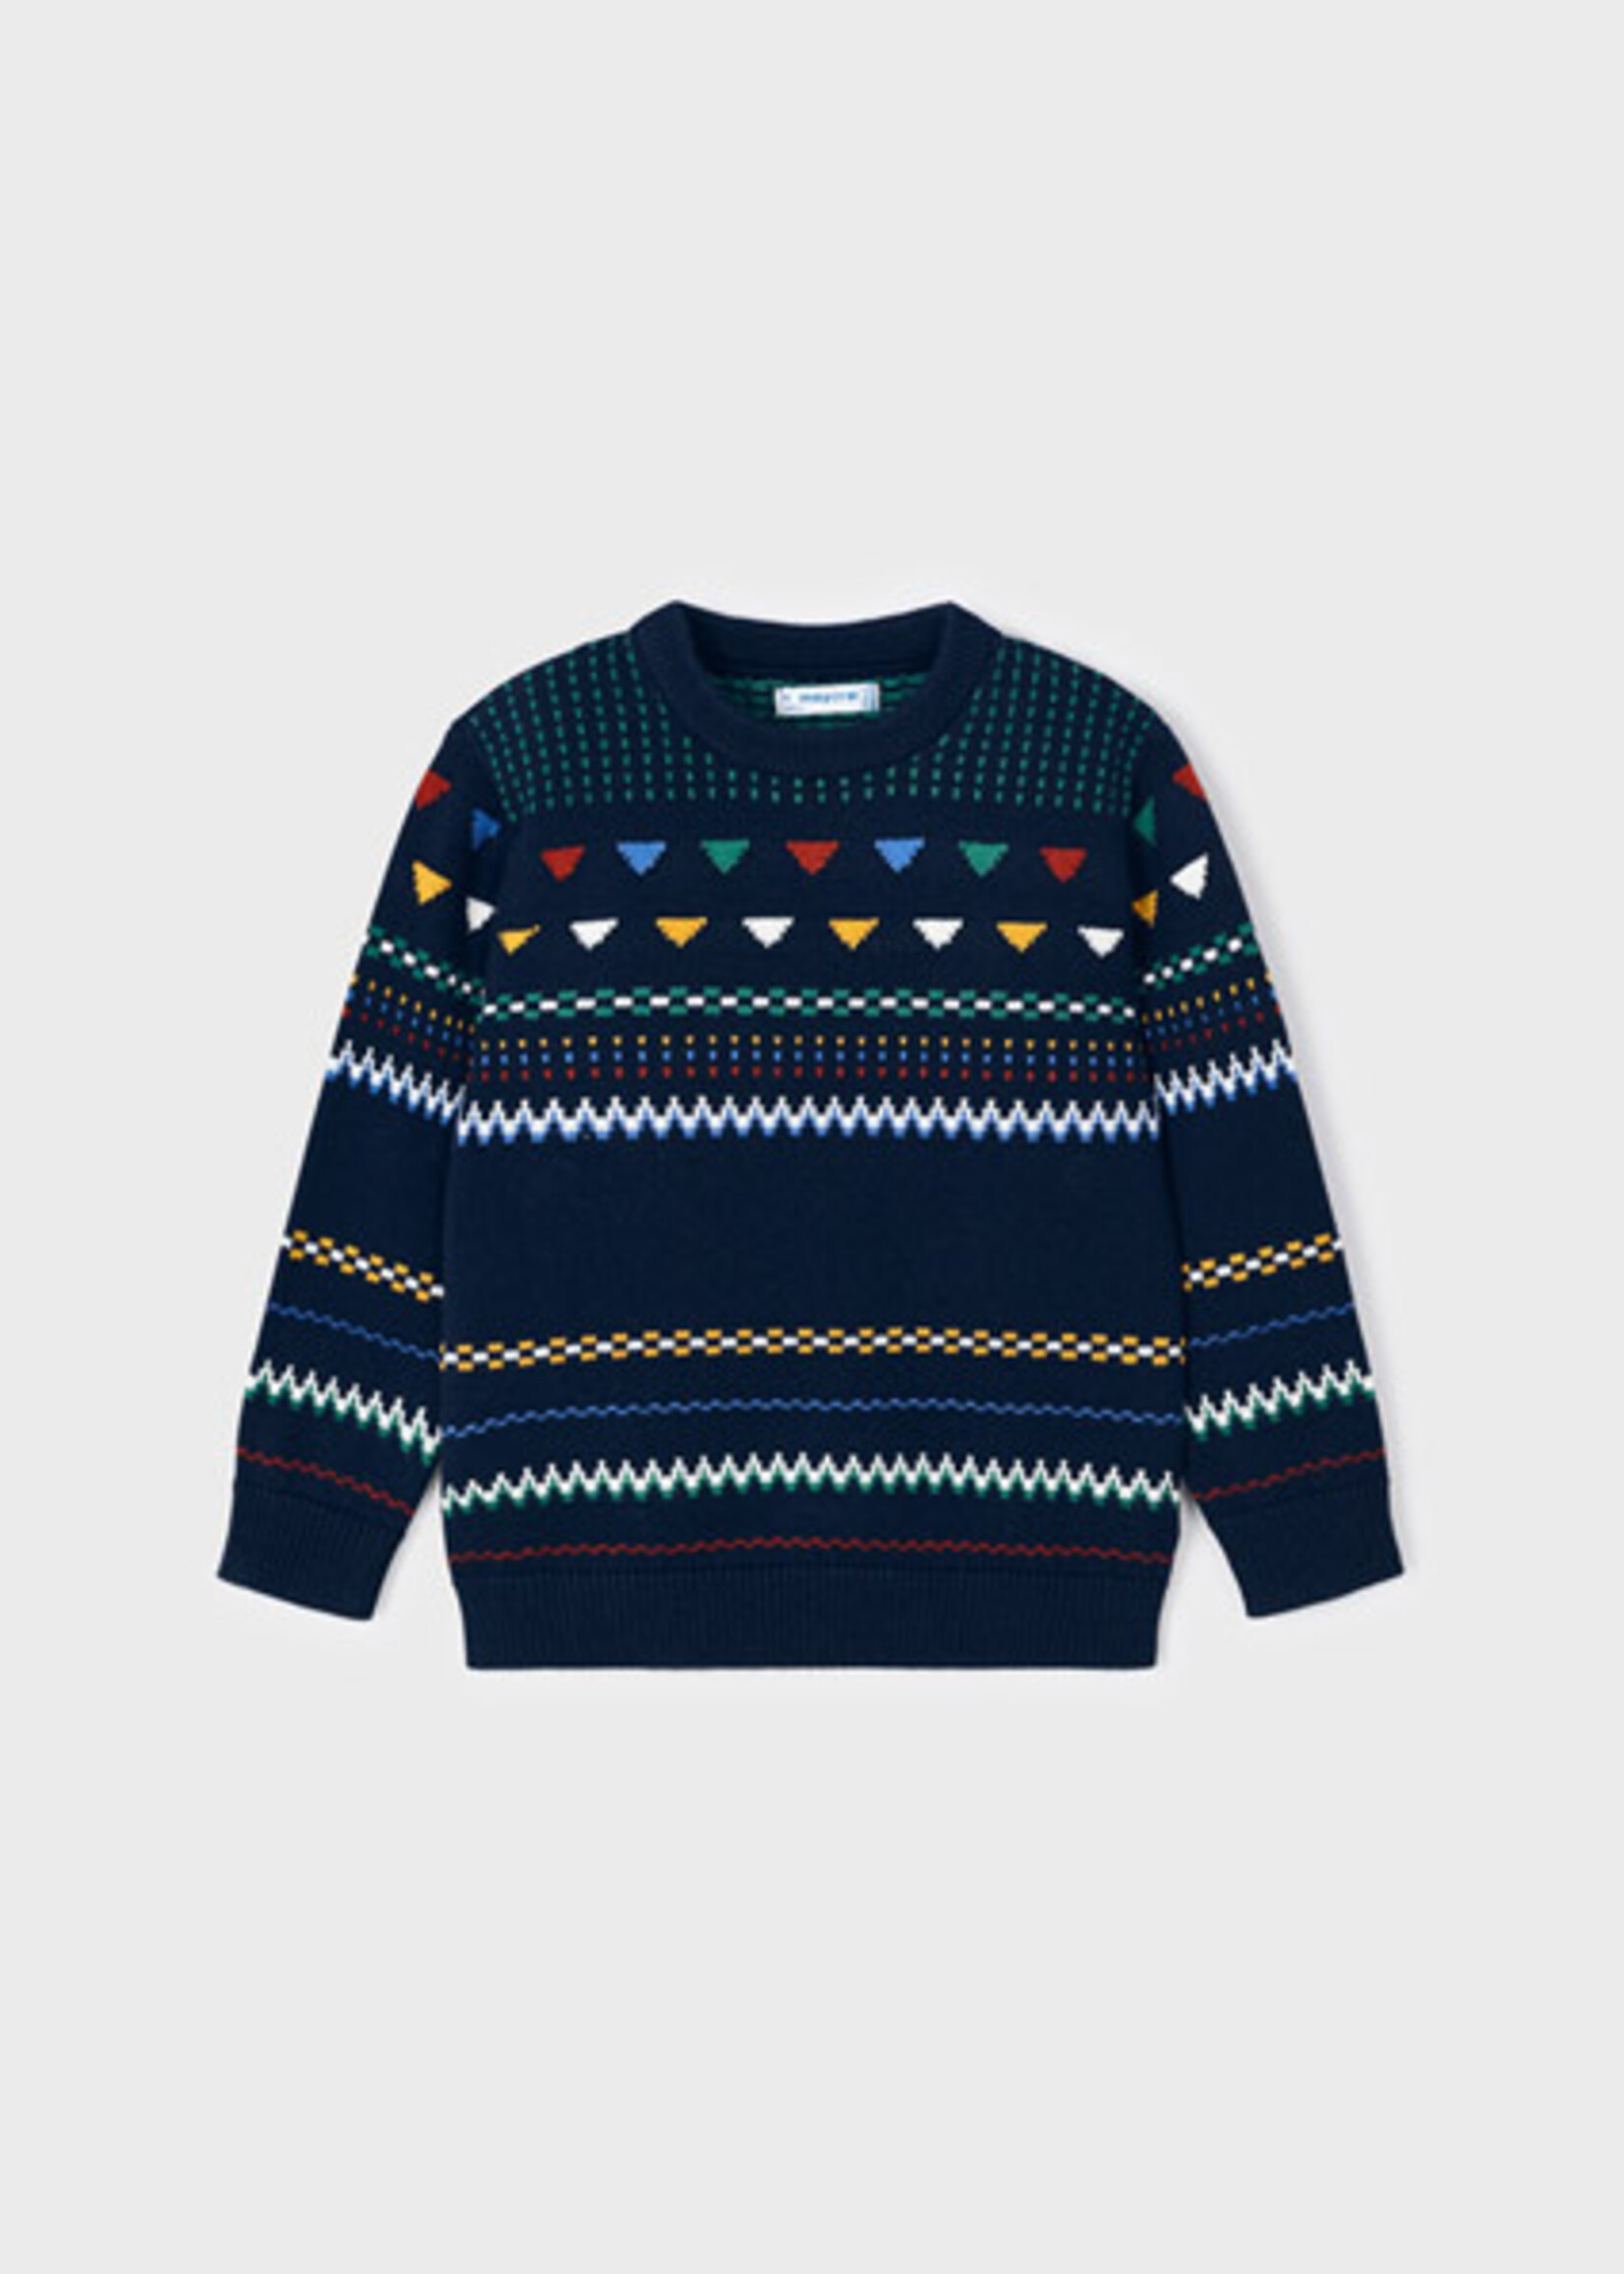 Mayoral 4323 Sweater                       Dark